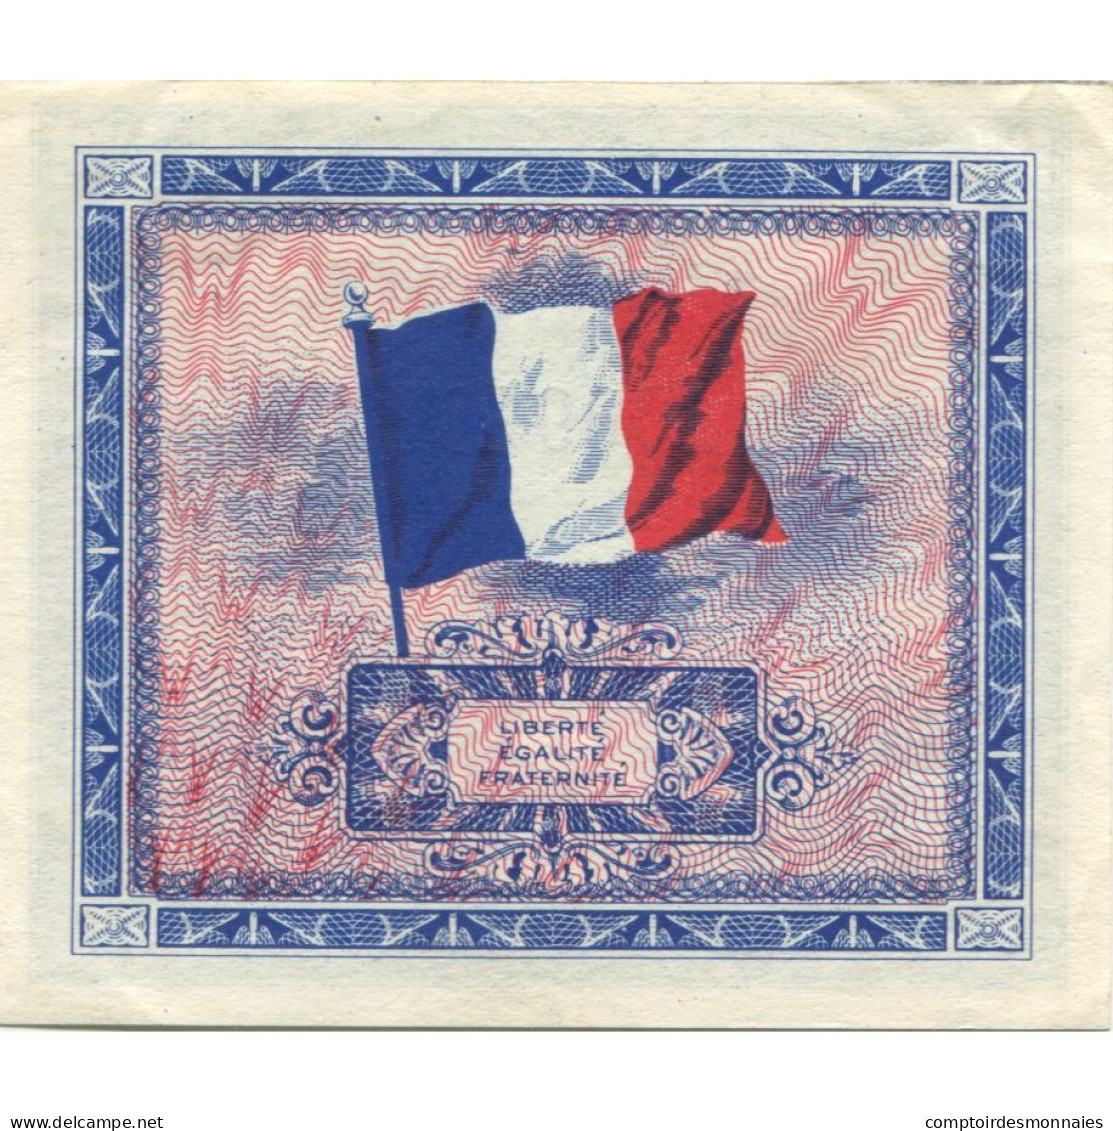 France, 5 Francs, Drapeau/France, 1944, 40091875, SPL, KM:115a - 1944 Flag/France